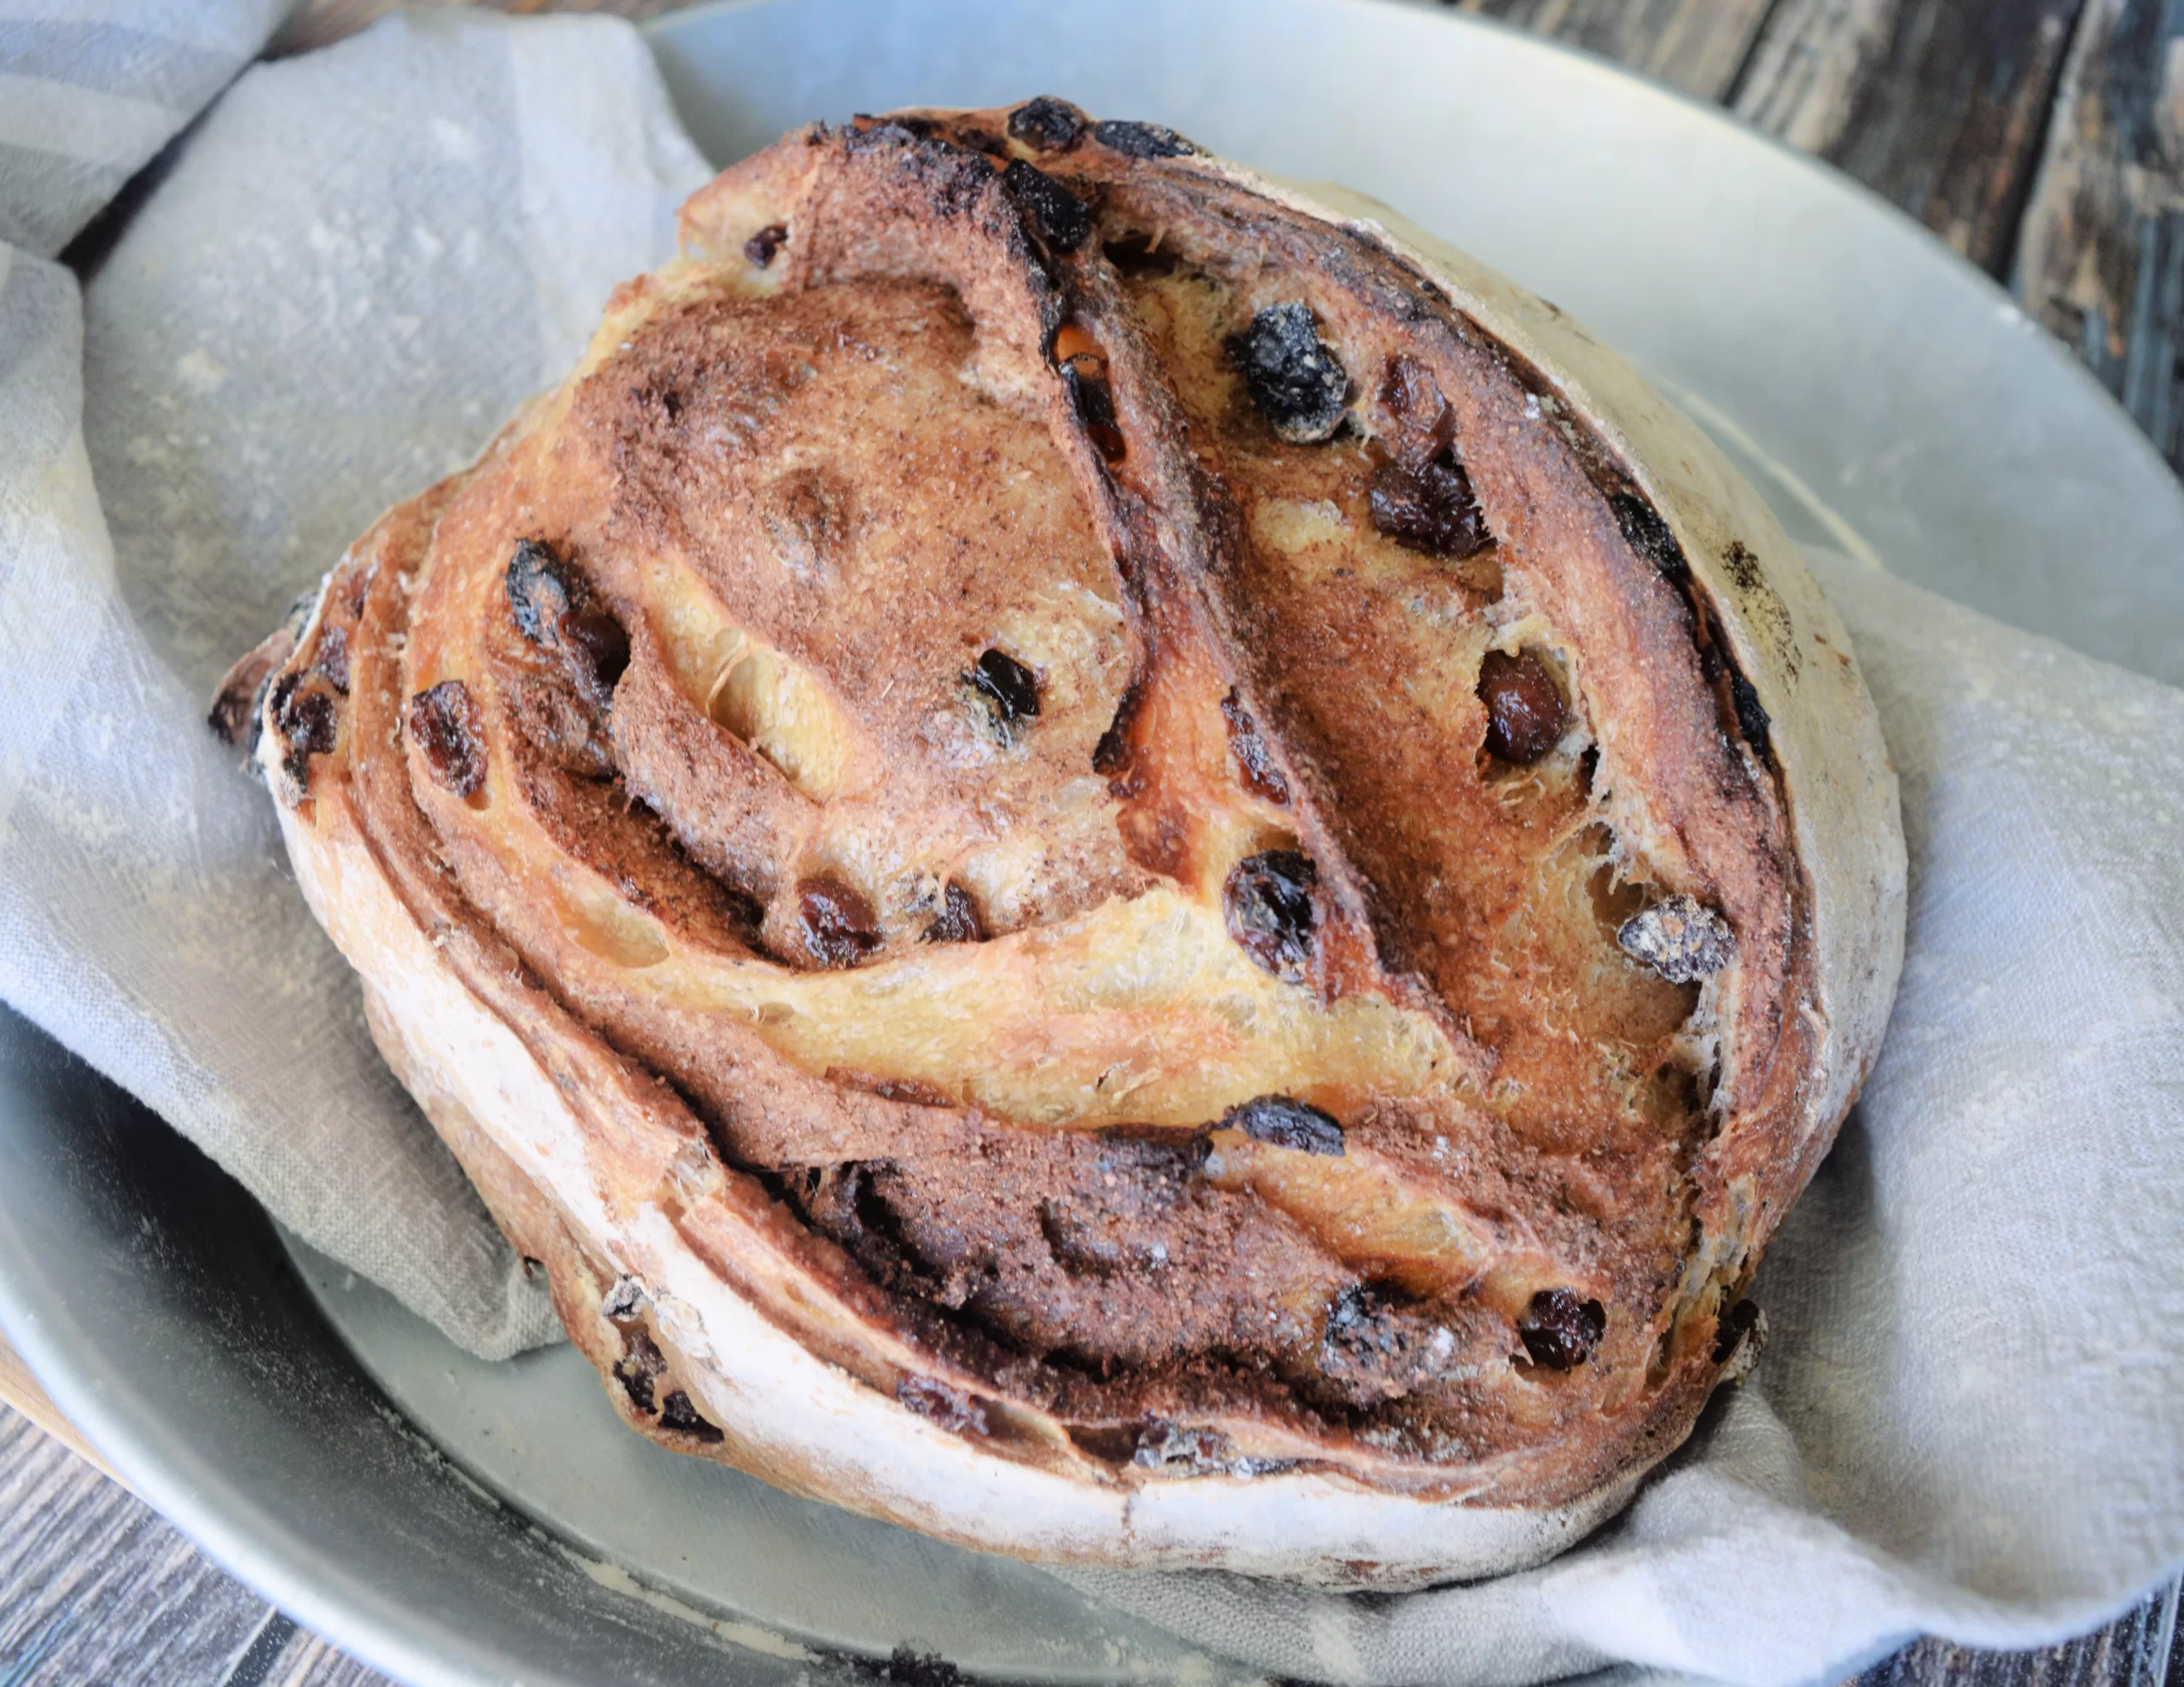 Freshly baked bread for The Best Cinnamon Raisin Sweet Sourdough Bread Recipe.